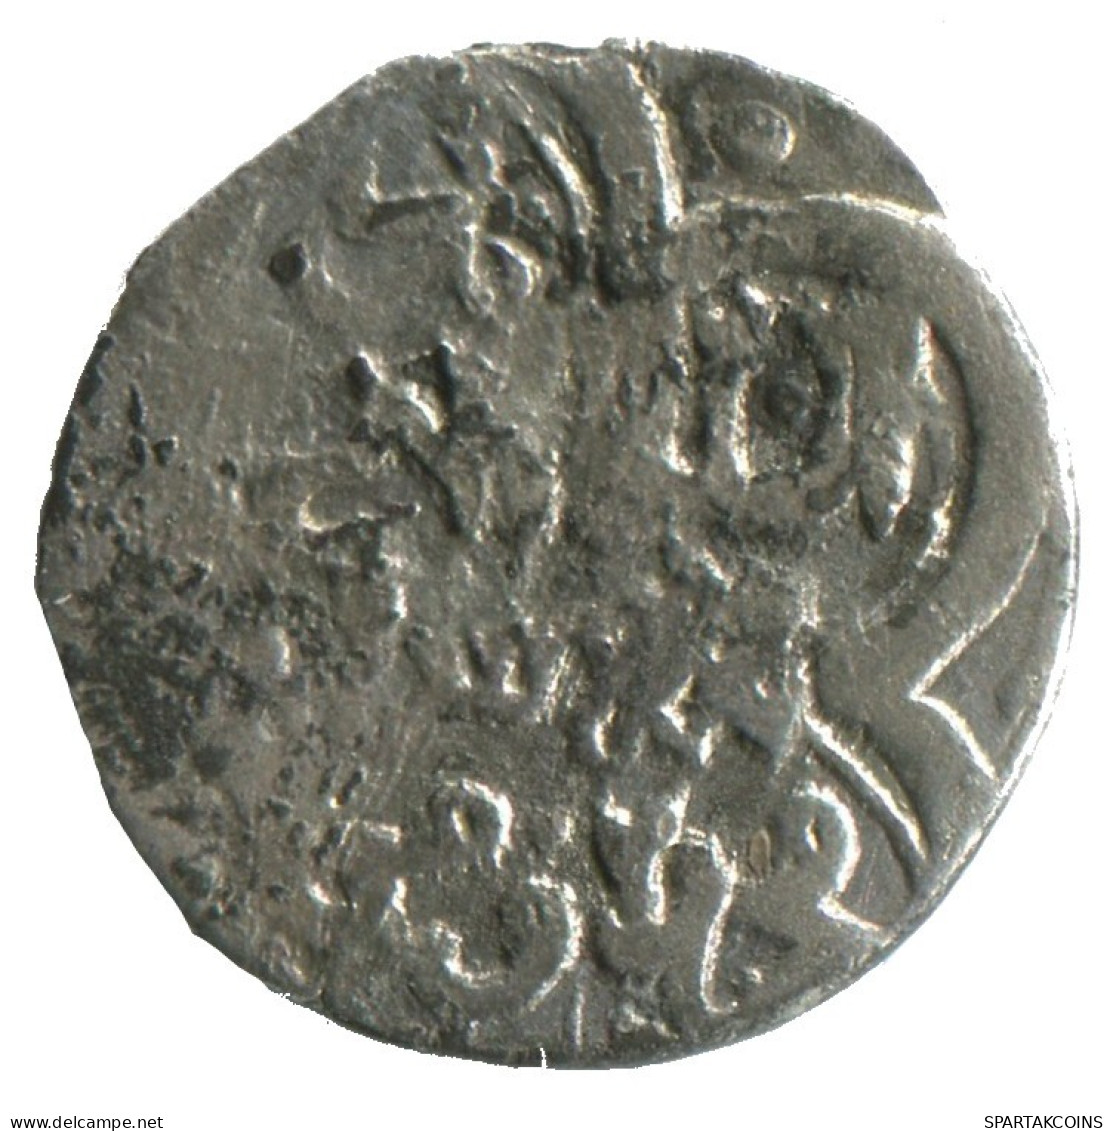 GOLDEN HORDE Silver Dirham Medieval Islamic Coin 1.4g/16mm #NNN2014.8.F.A - Islamische Münzen